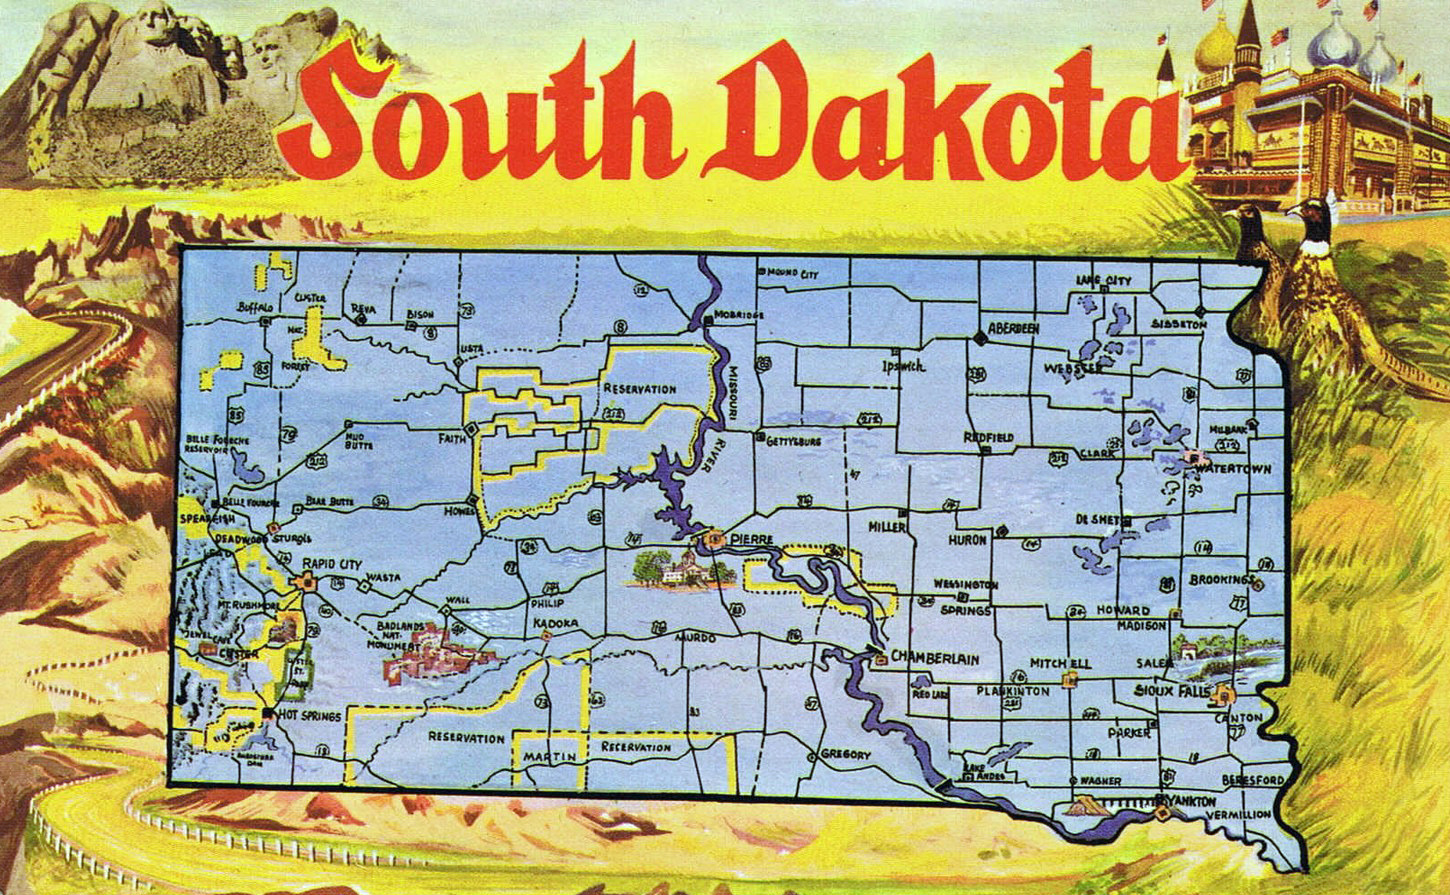 South Dakota Tourist Map Large tourist illustrated map of South Dakota state | South Dakota 